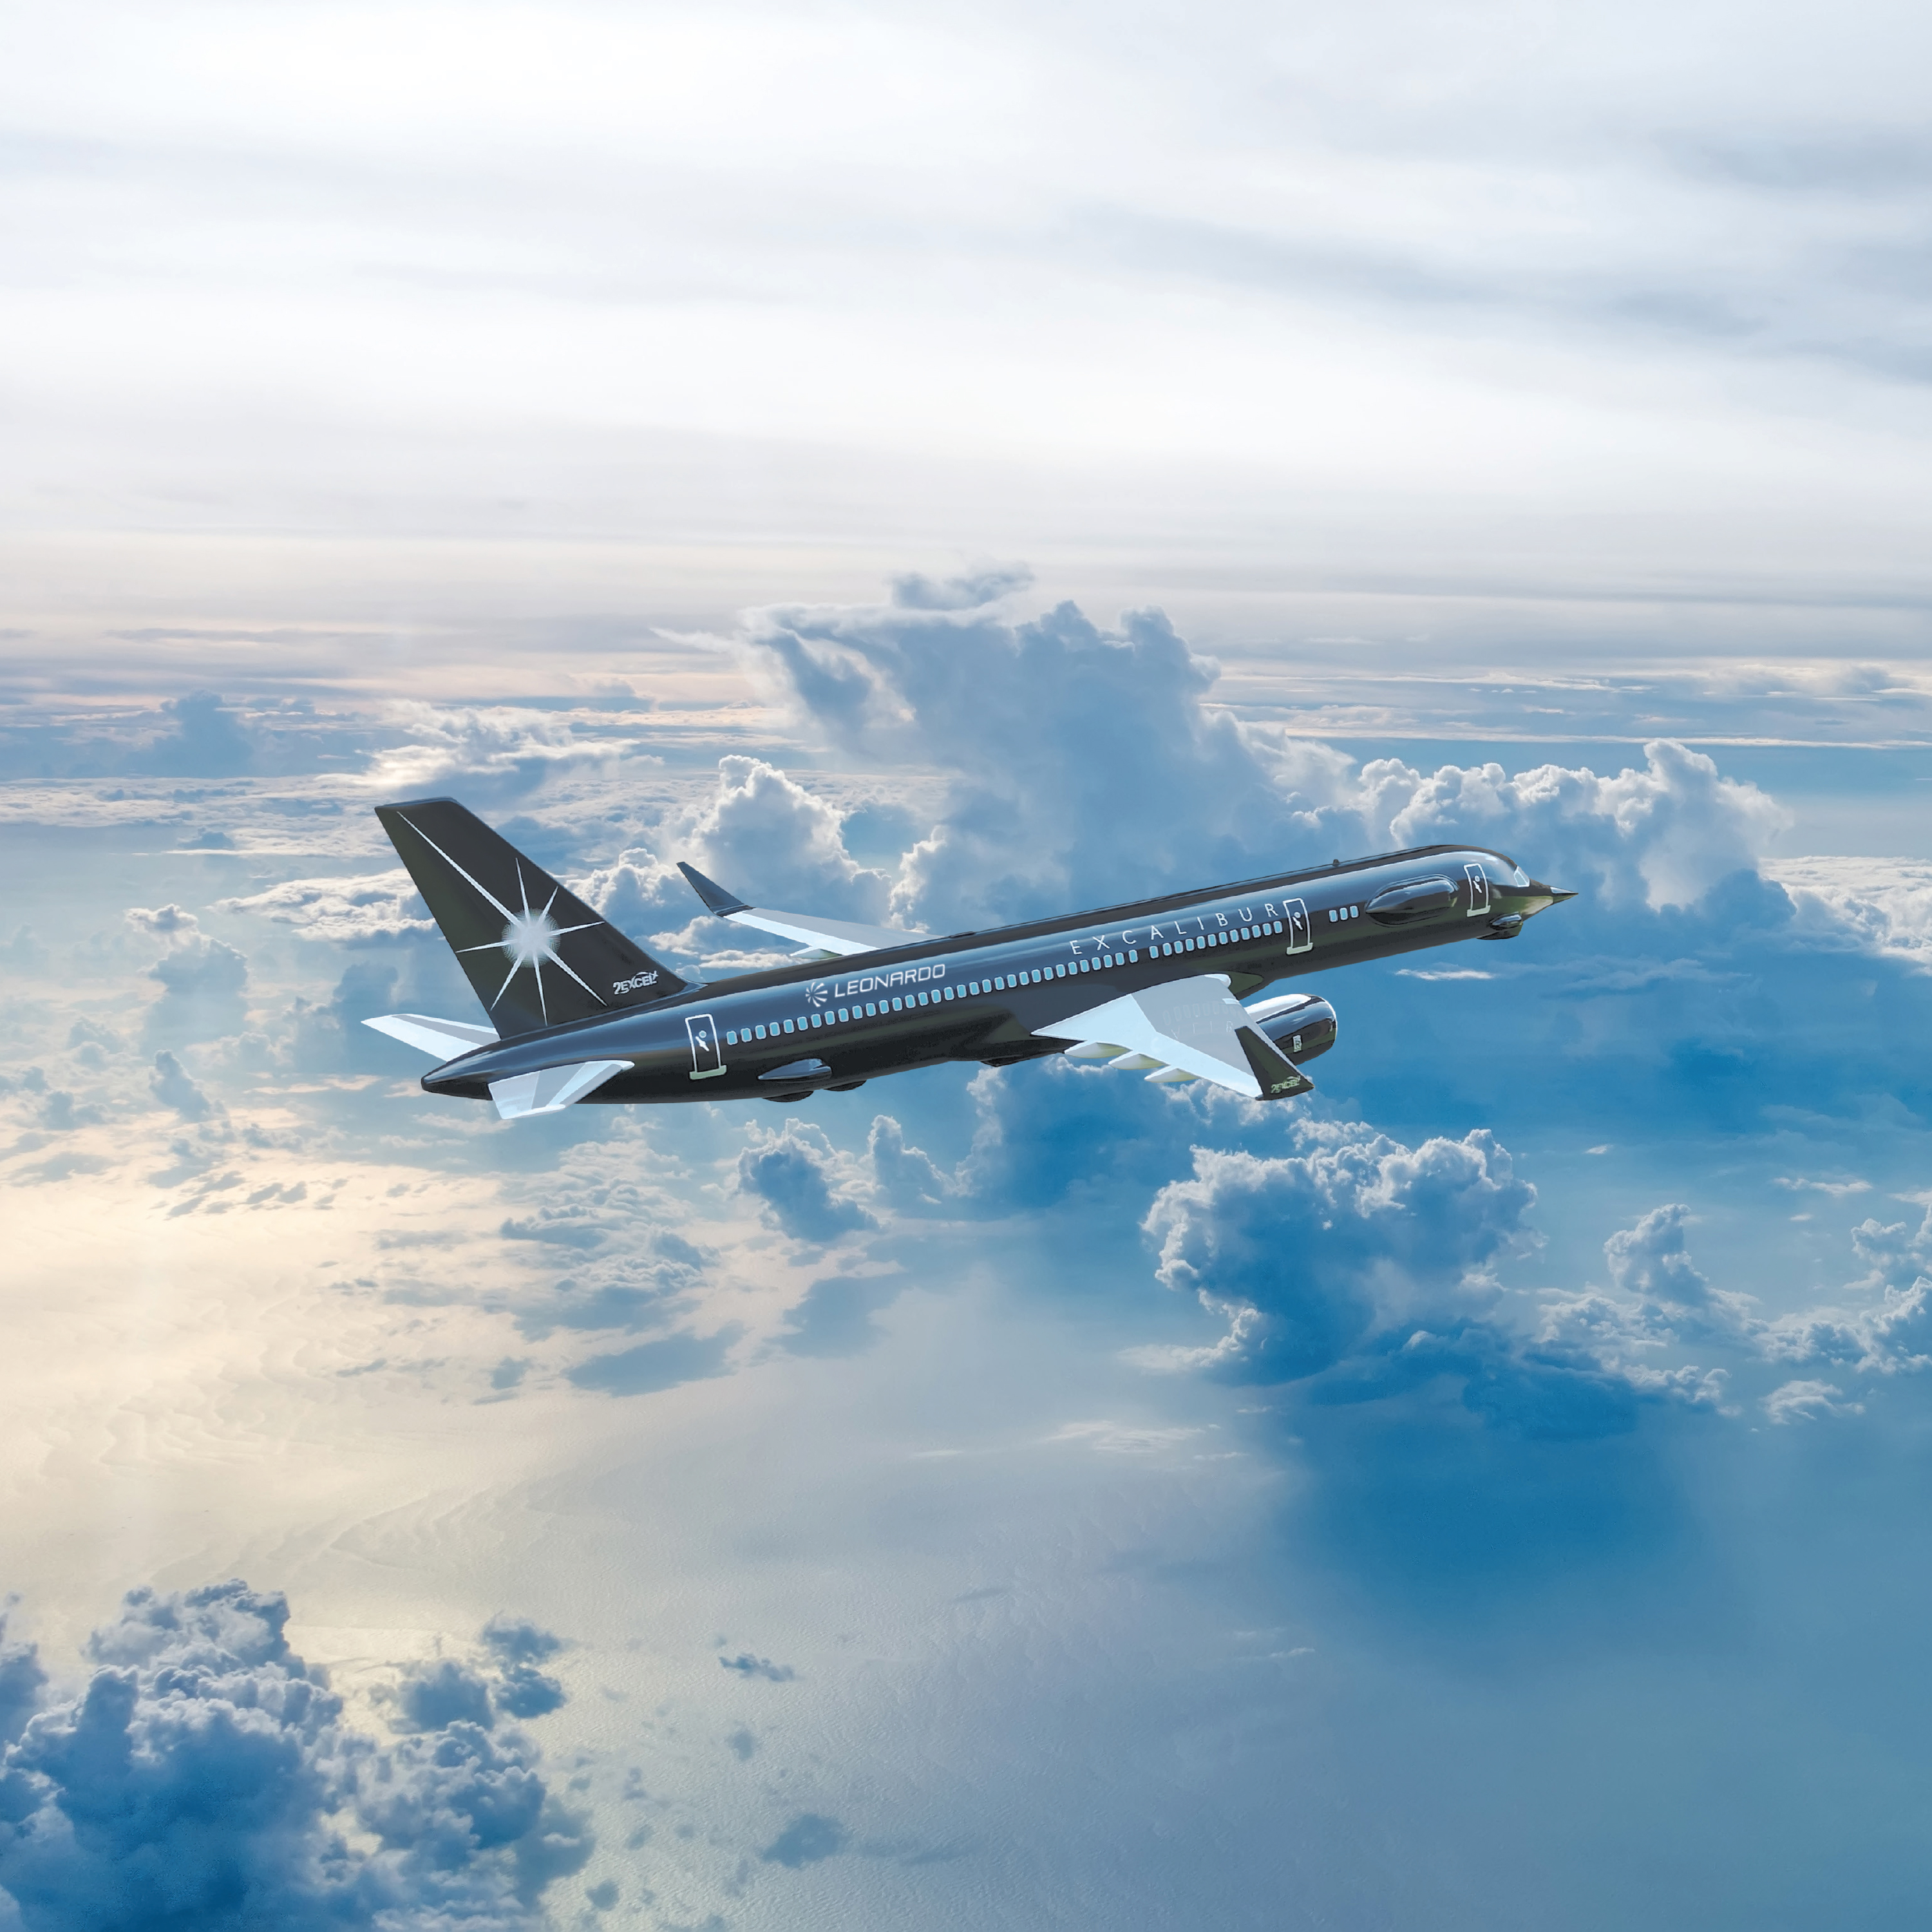 BoeingRolls ShortInlet Flight Tests Show Potential To Cut Big Fan Drag   Aviation Week Network